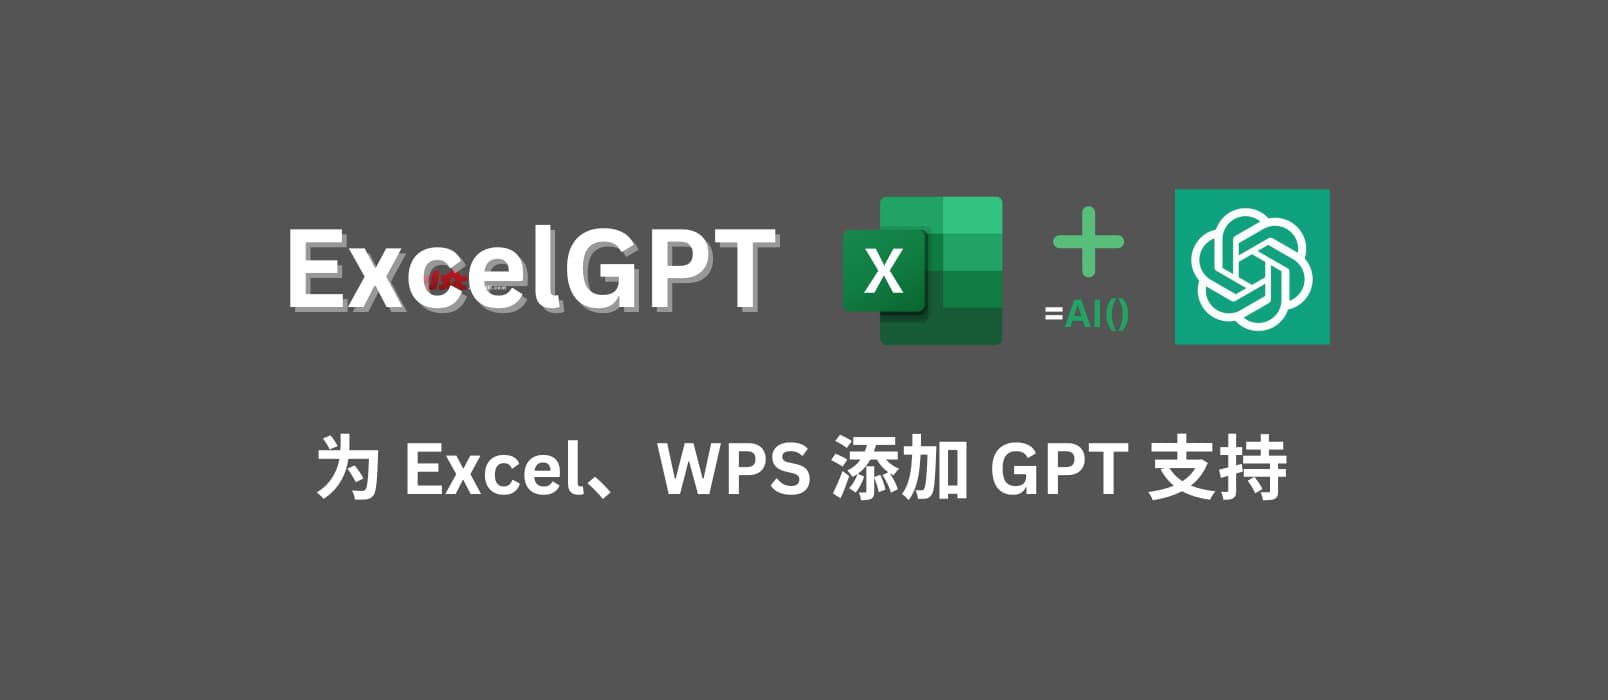 ExcelGPT - 为 Excel、WPS 添加 GPT 支持